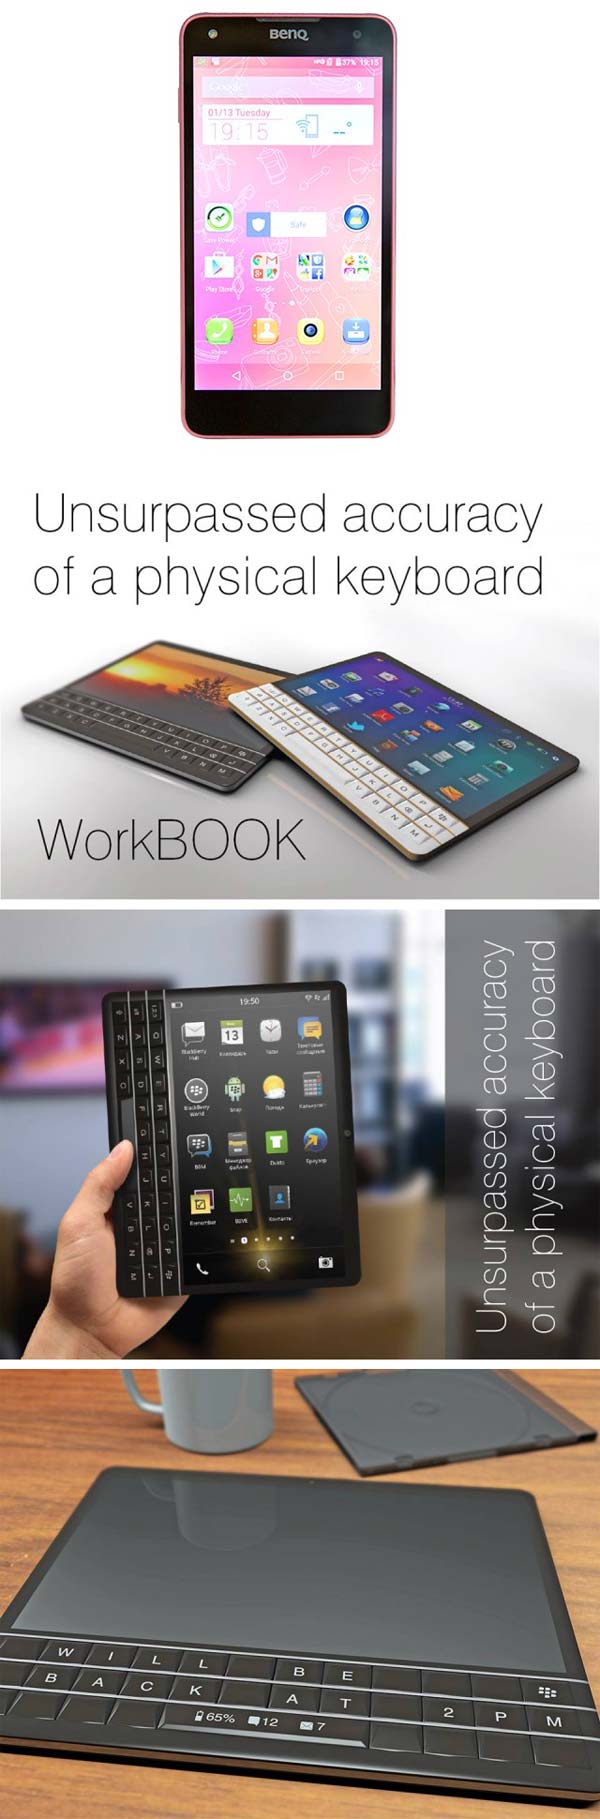 На фото фаблет BenQ F52 и концепт планшета BlackBerry WorkBOOK